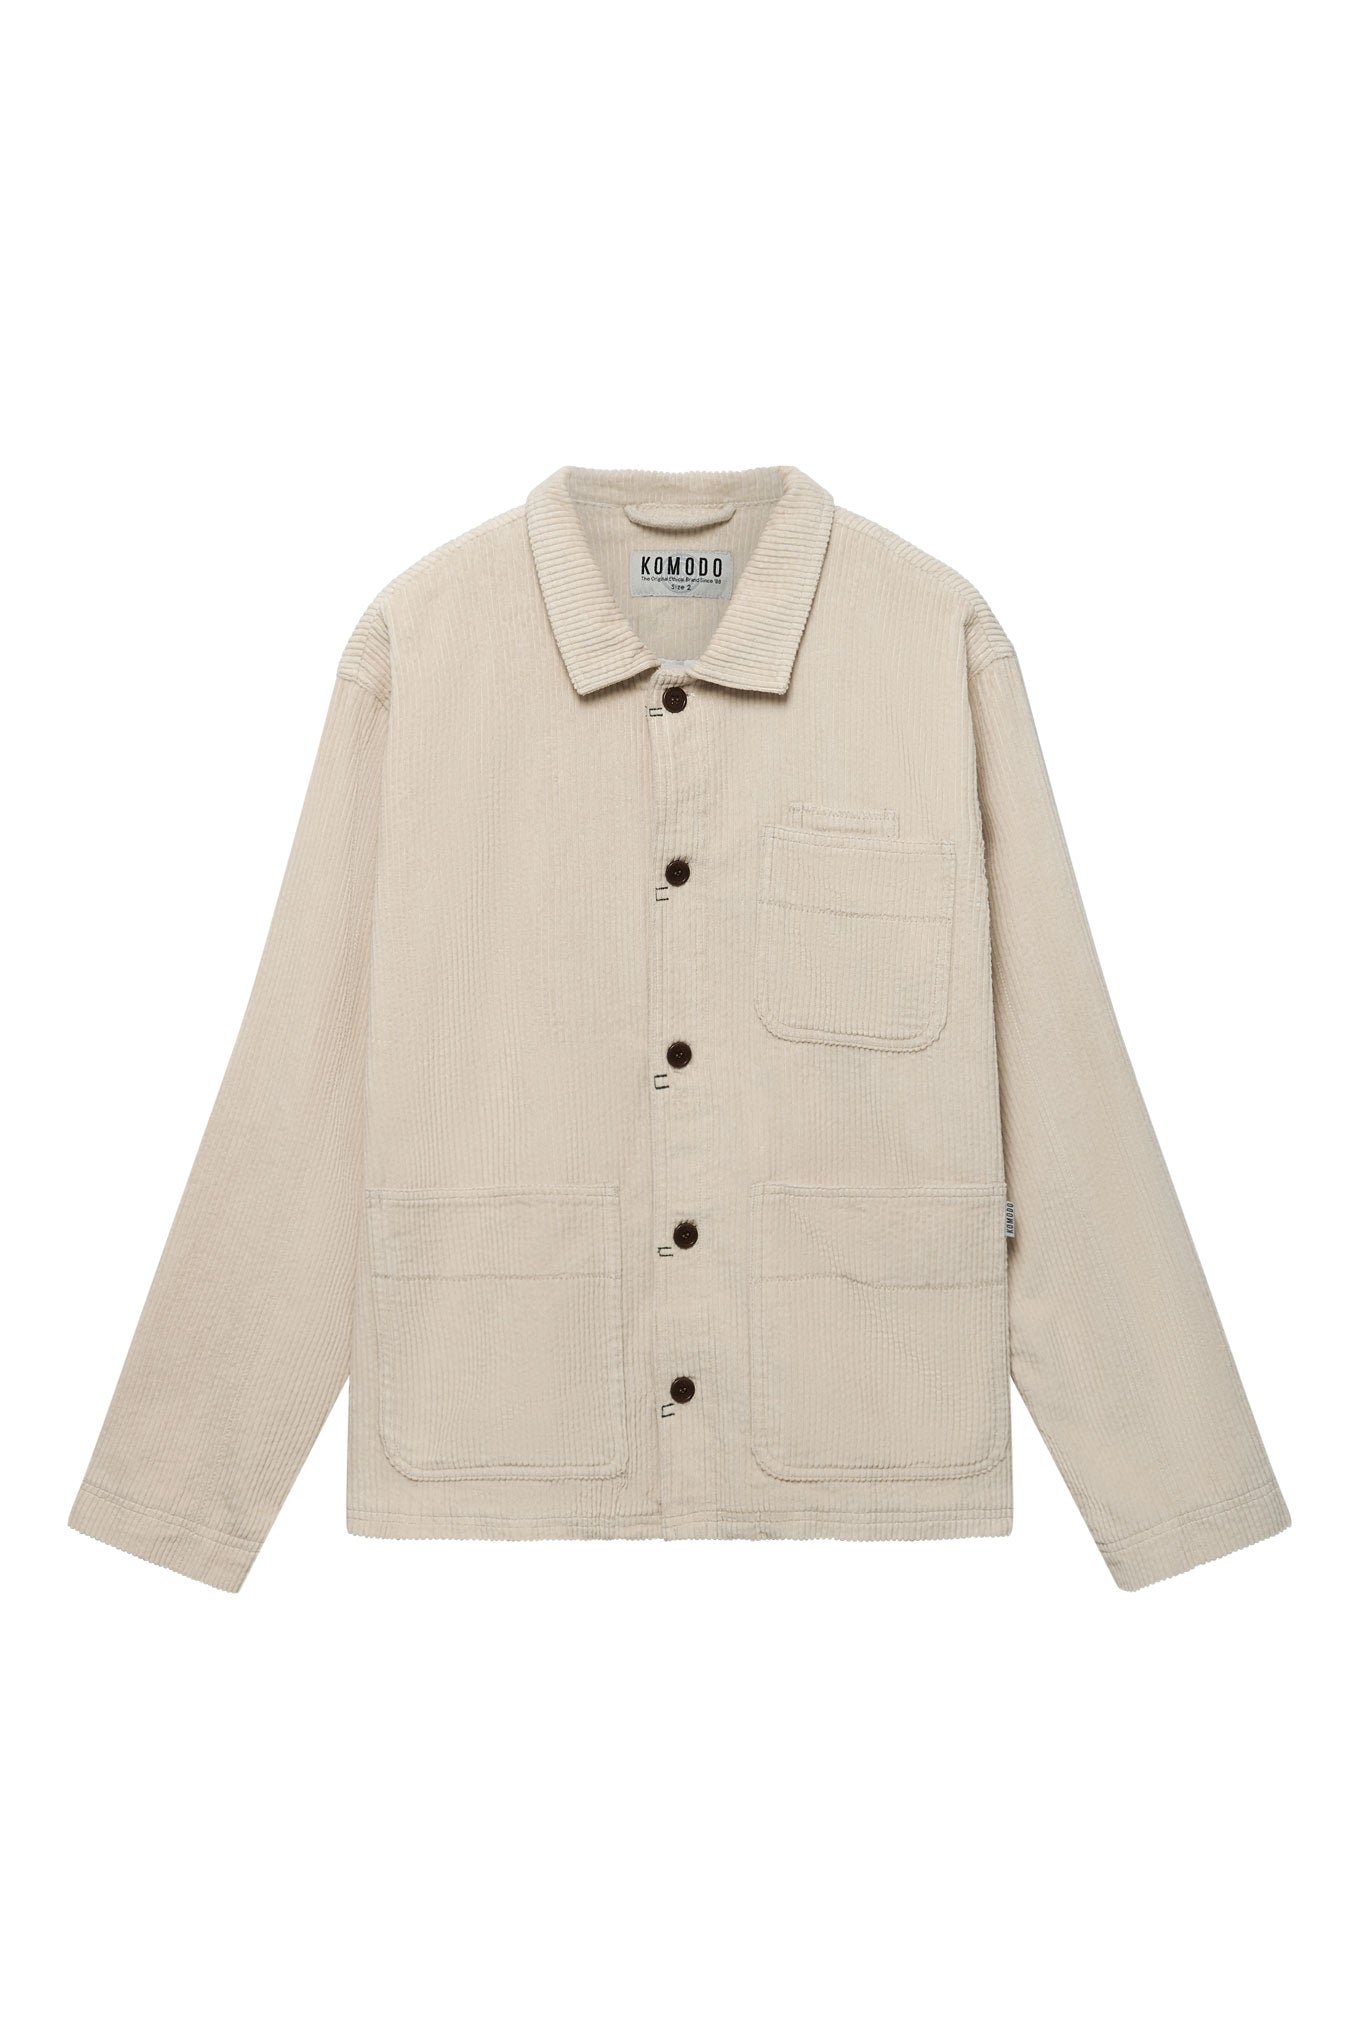 White corduroy jacket MONDRIAN made from 100% organic cotton from Komodo